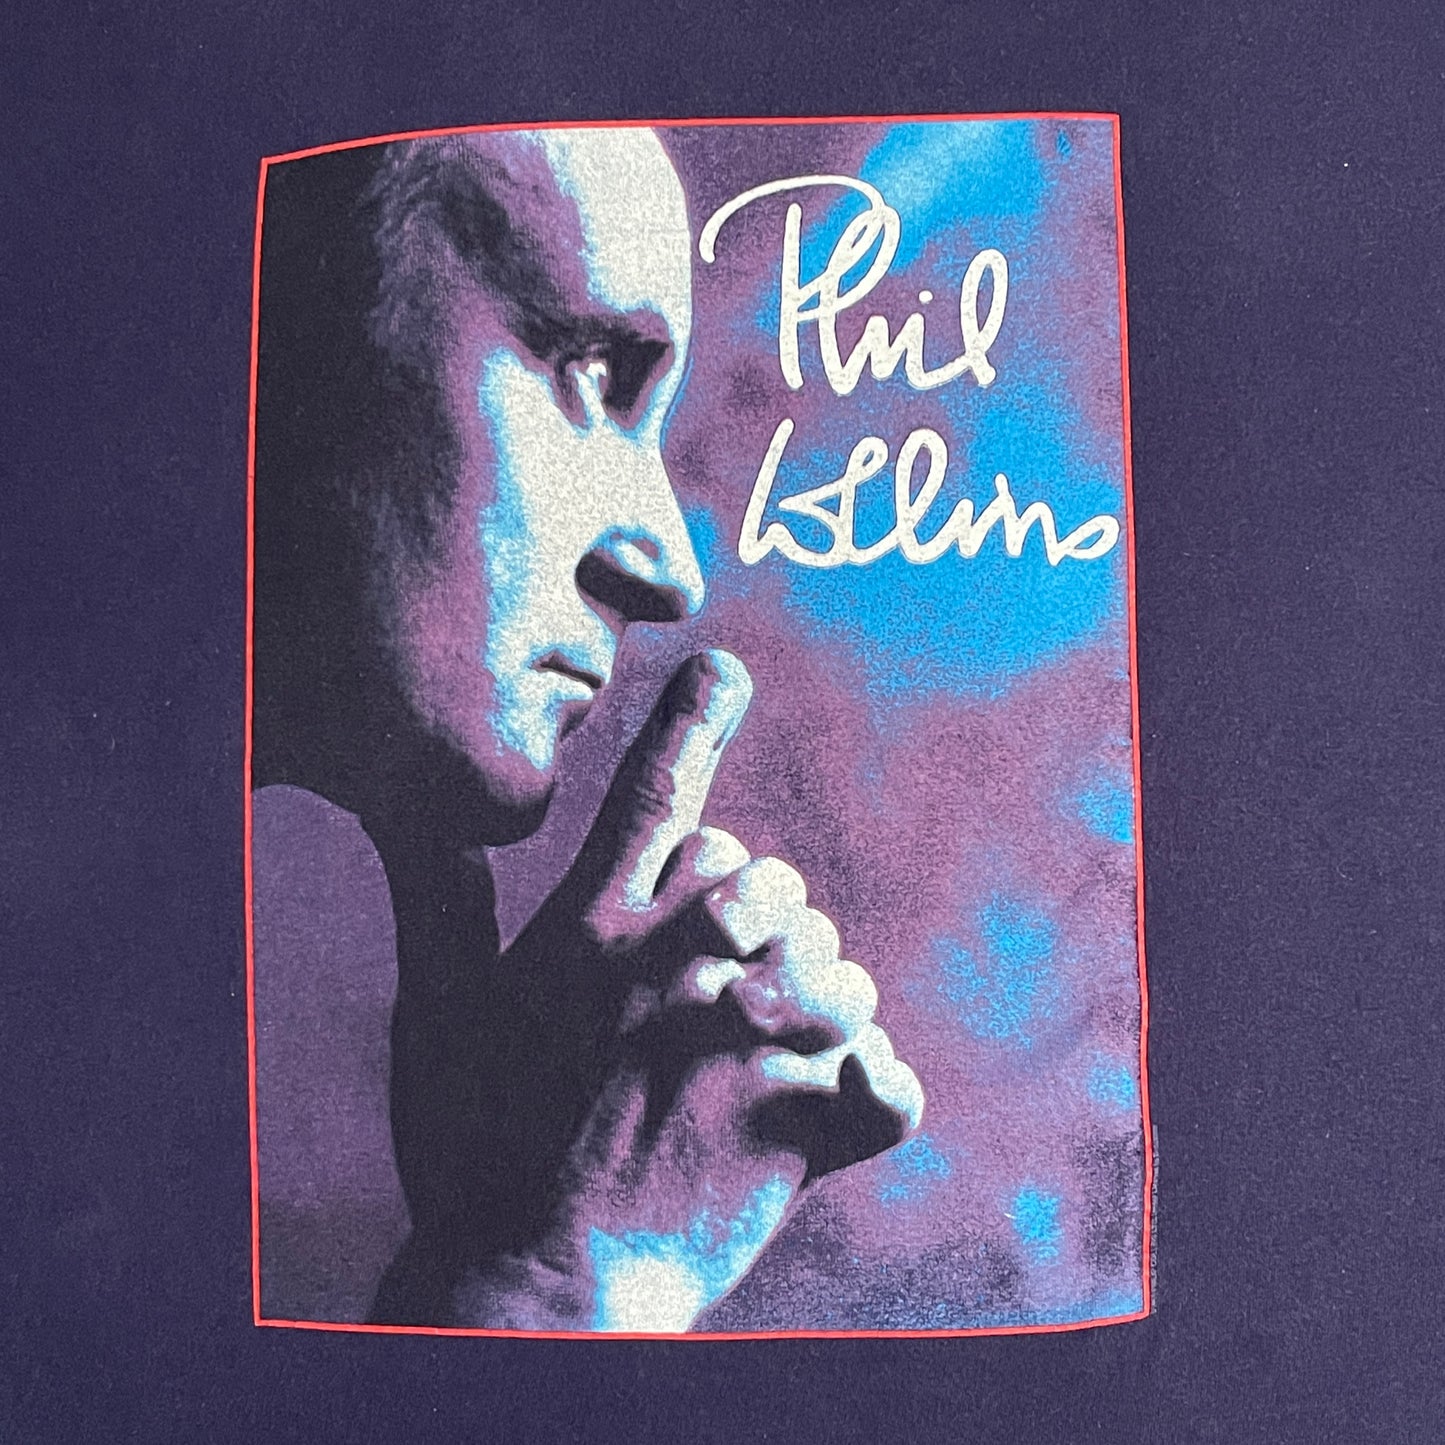 1994 Brockum Phil Collins Tee (XL)